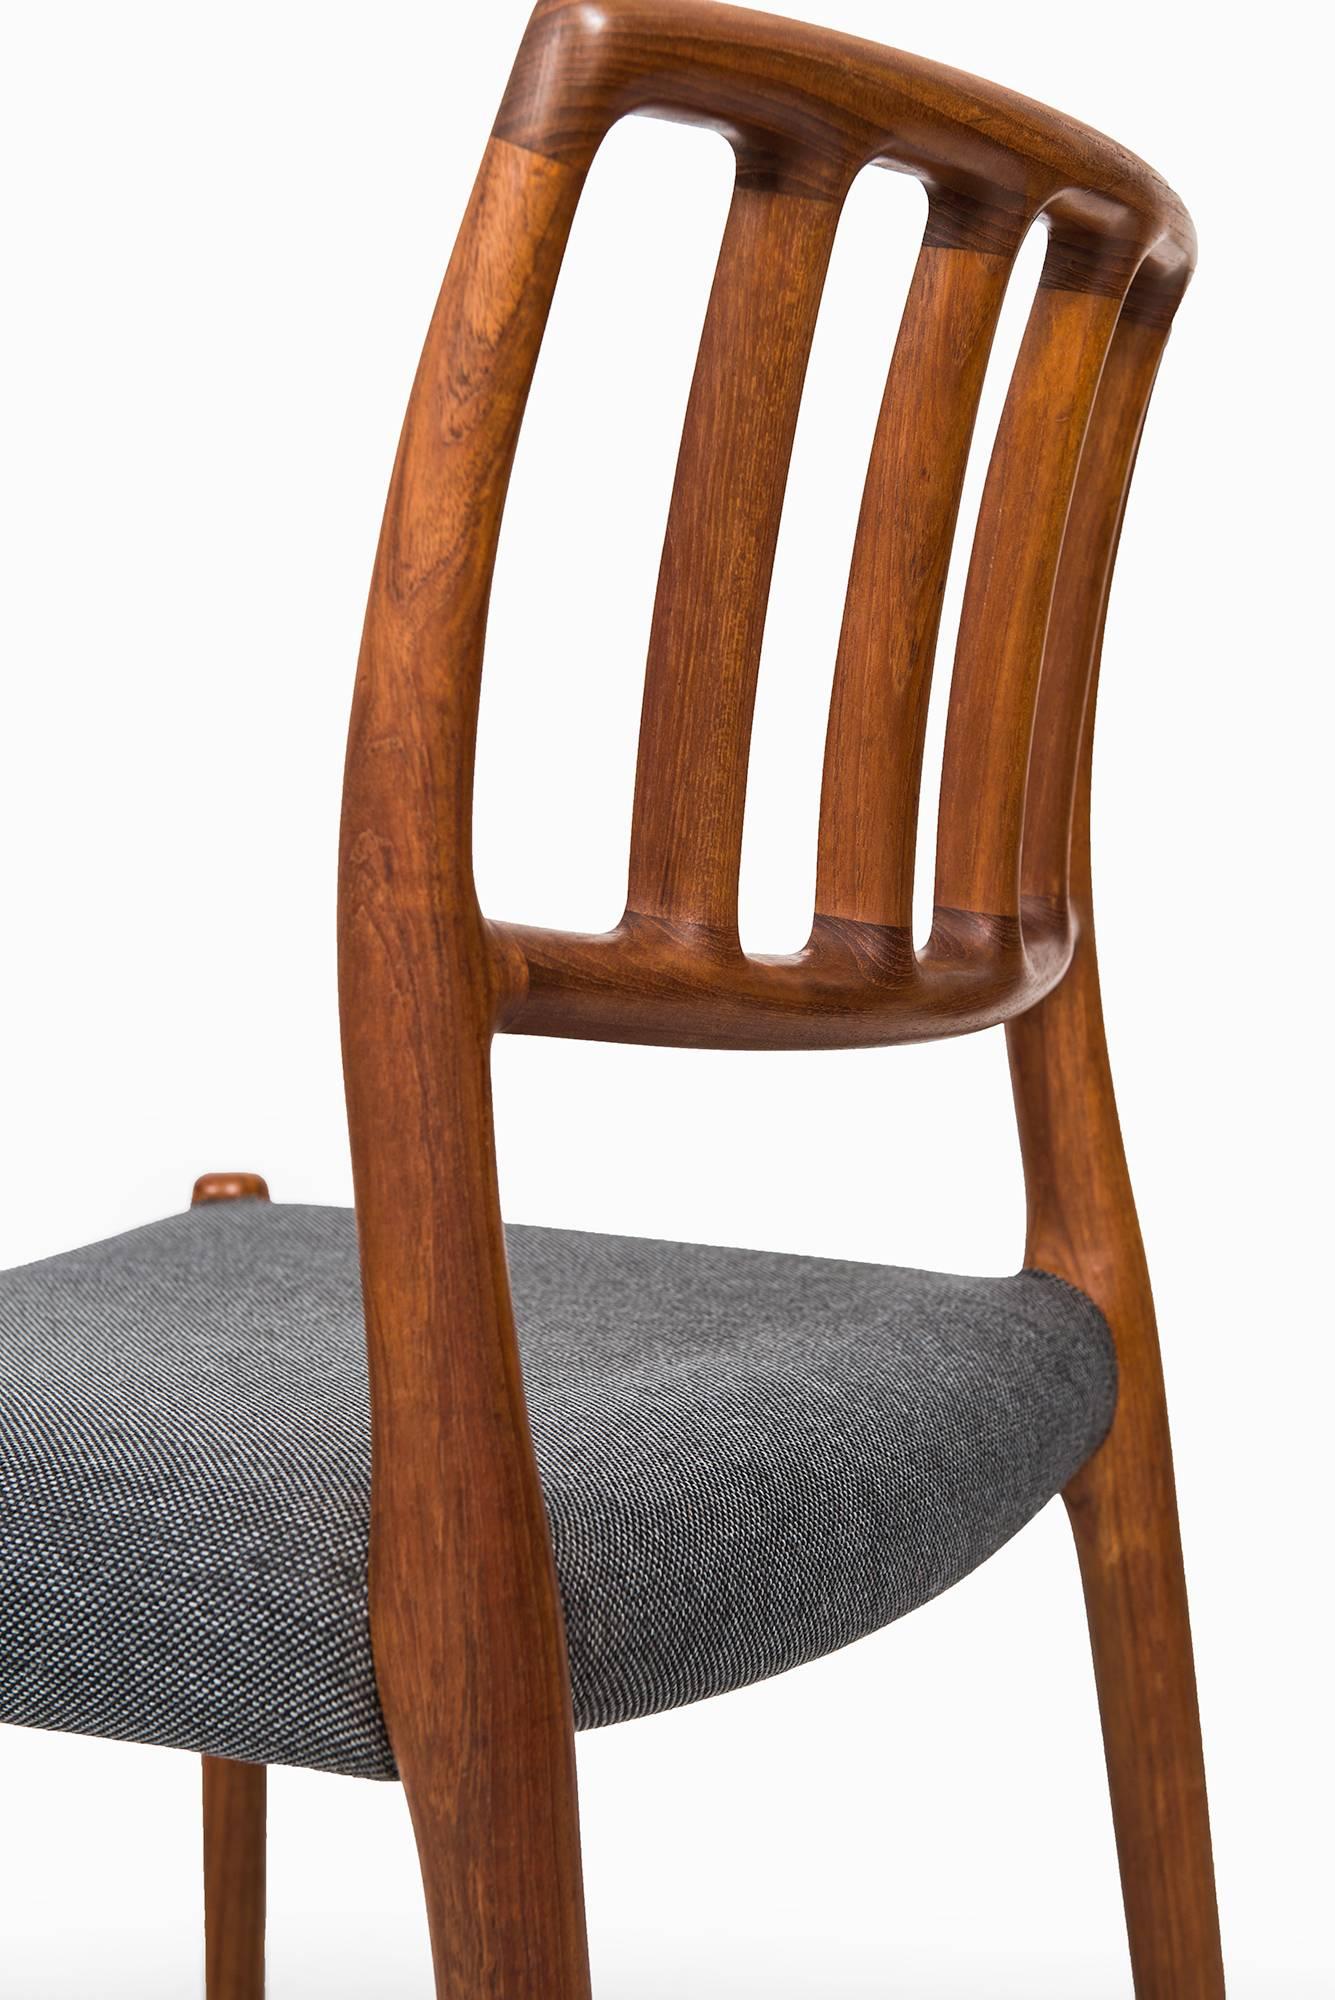 Fabric Niels O. Møller Dining Chairs Model 83 by J.L Møllers Møbelfabrik in Denmark